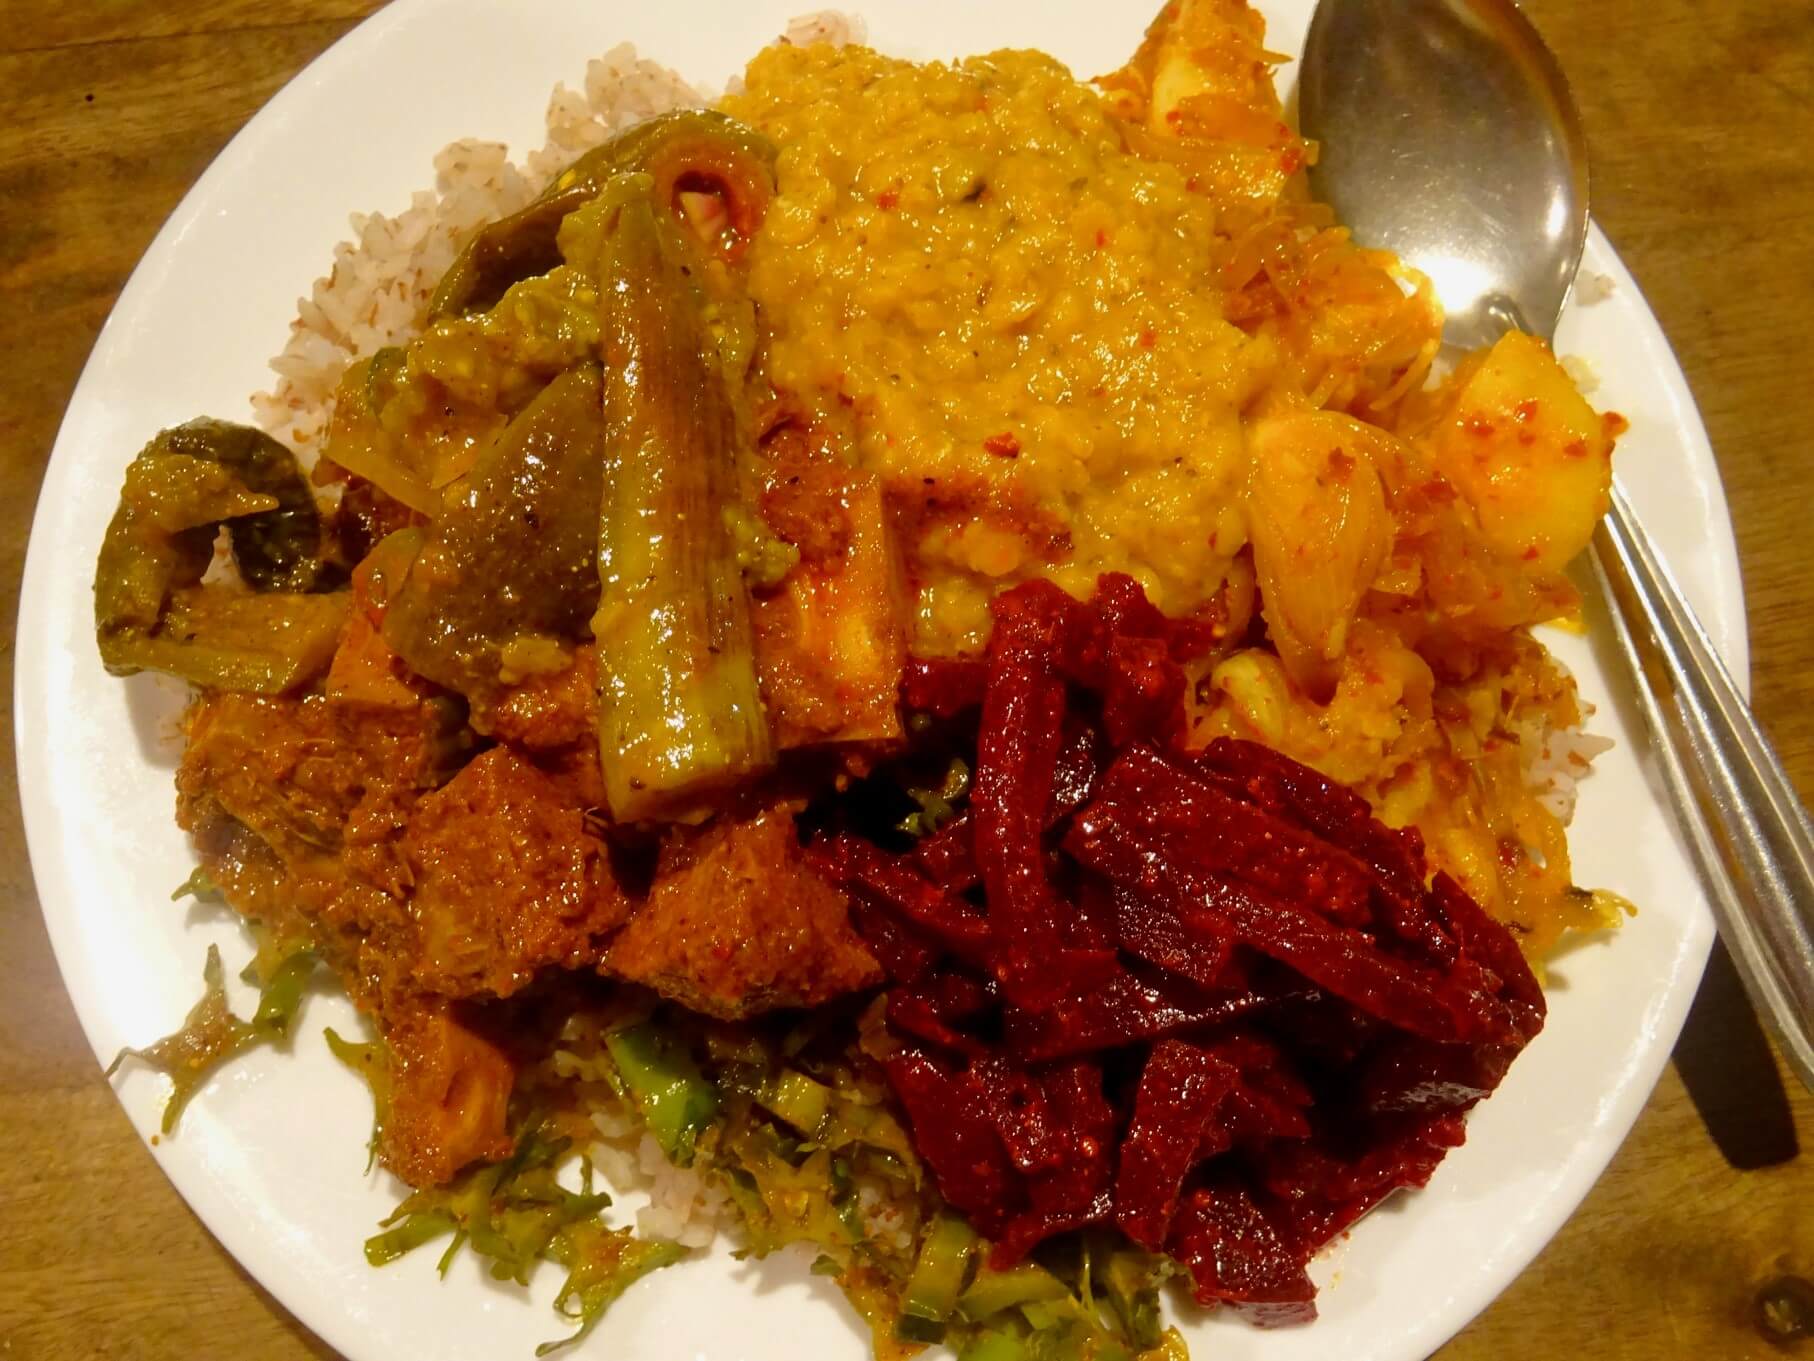 Homecooked meal in Sri Lanka smaller travel footprint